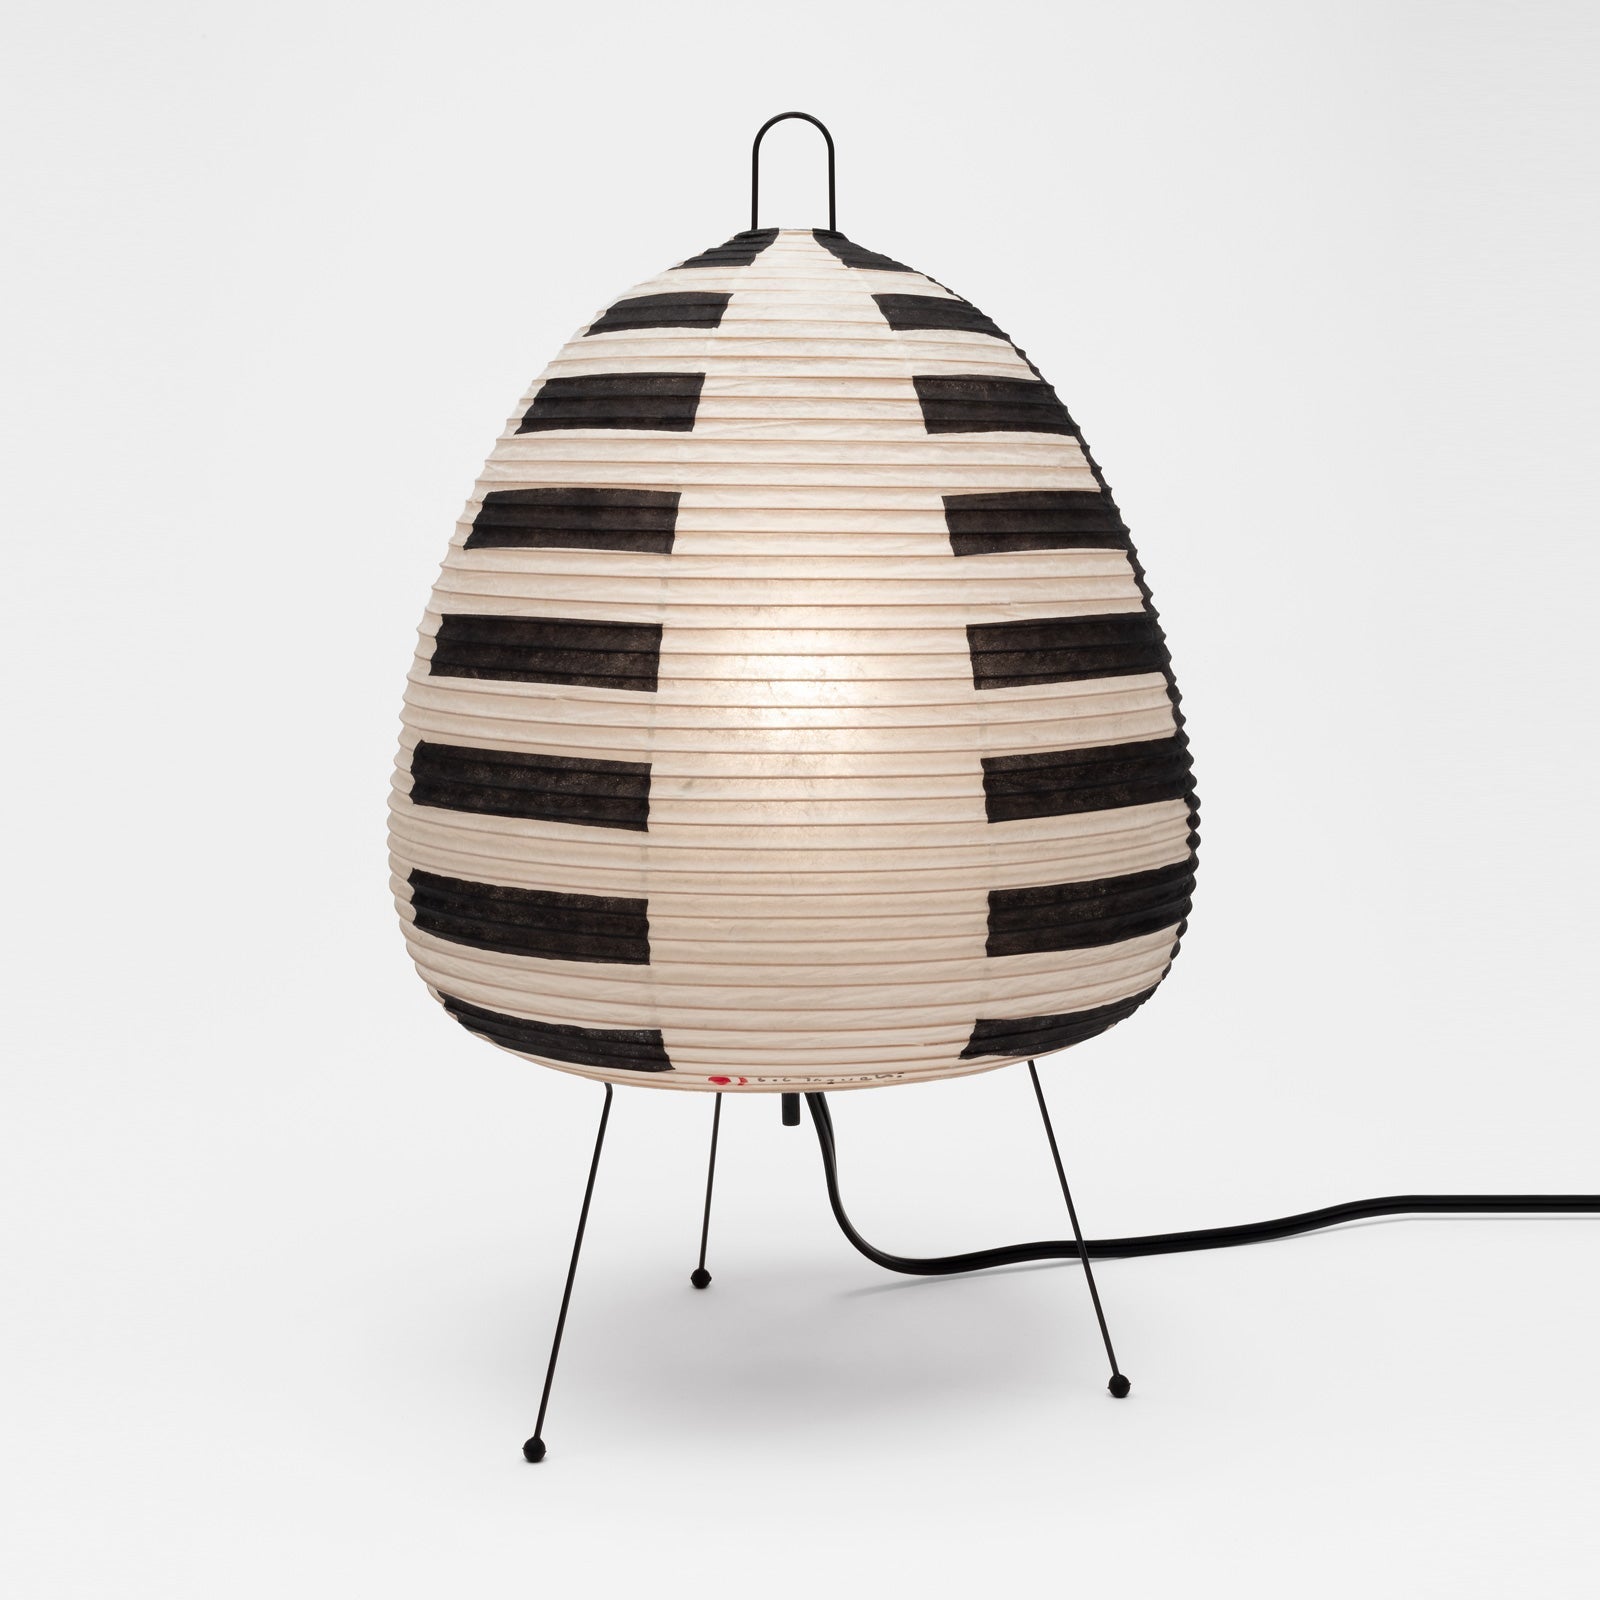 Akari 1as Paper Lantern Lamp - Vibrant Japanese Design By Isamu Noguchi - Minimalist Table Lamps